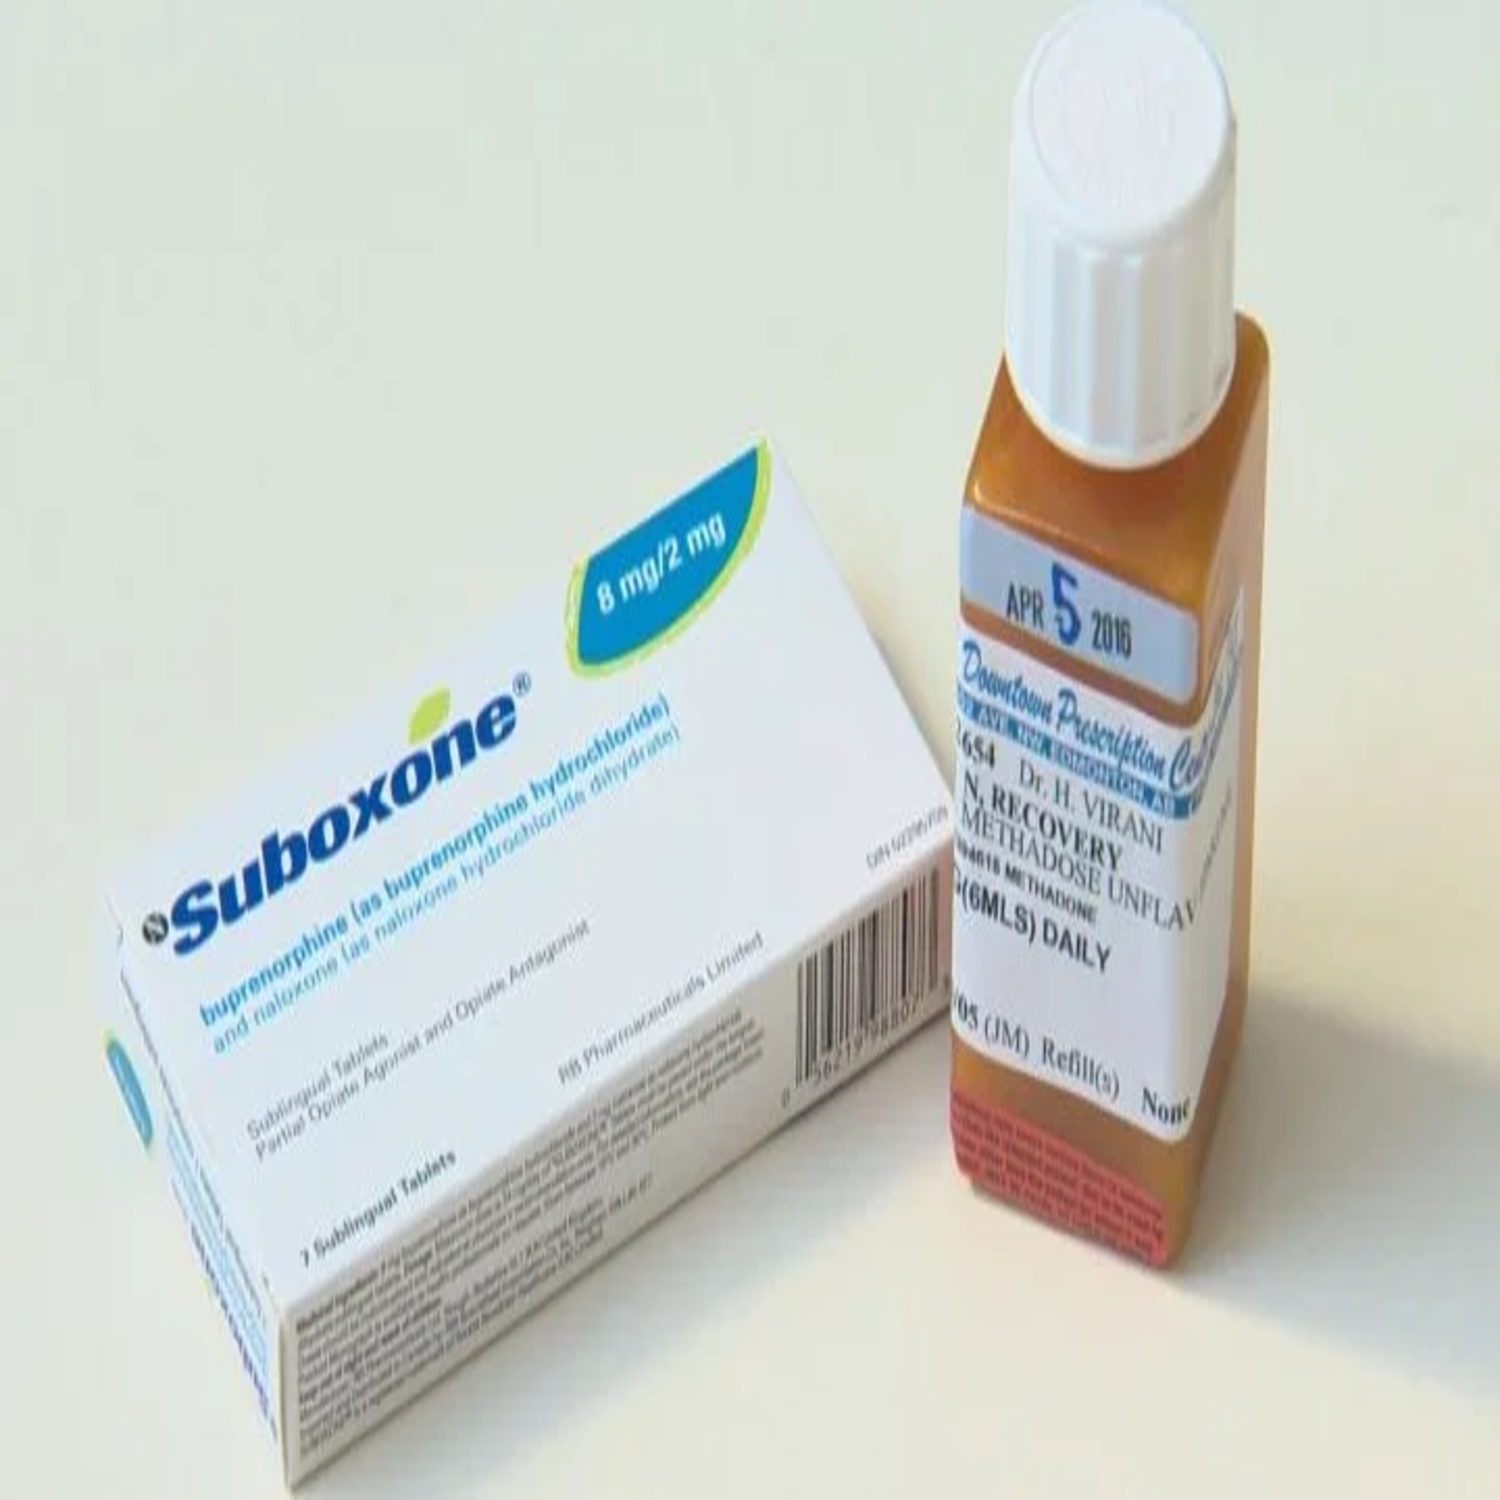 Bunex Buprenorphine 8mg Tablets